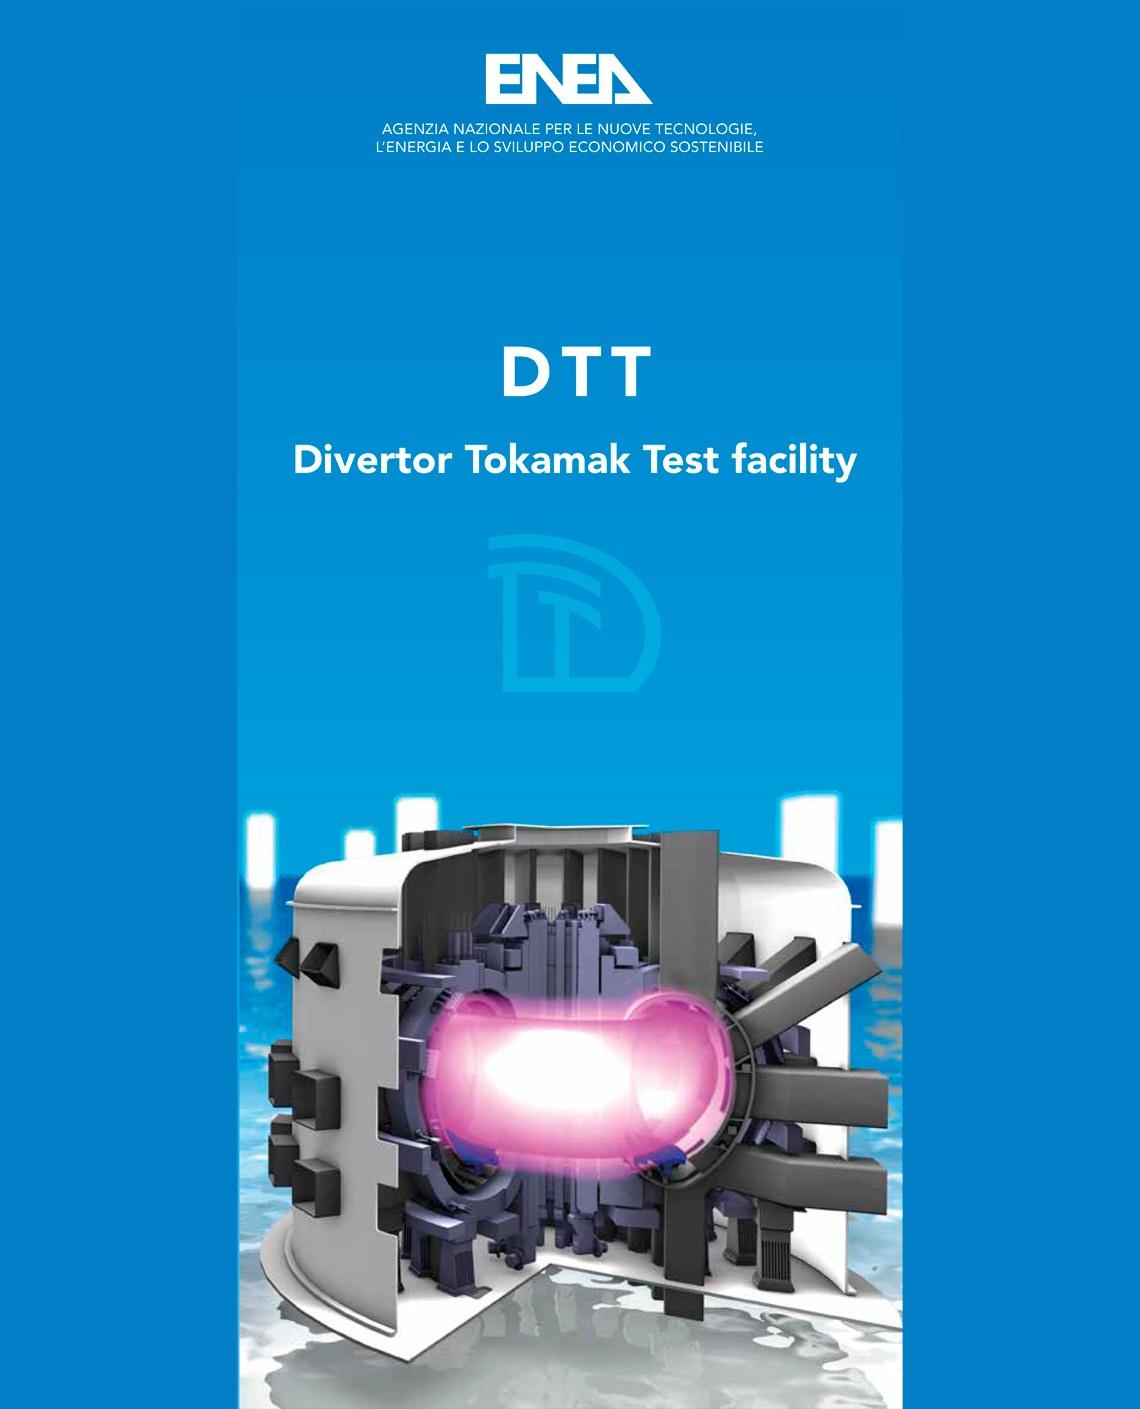  Divertor Tokamak Test facility